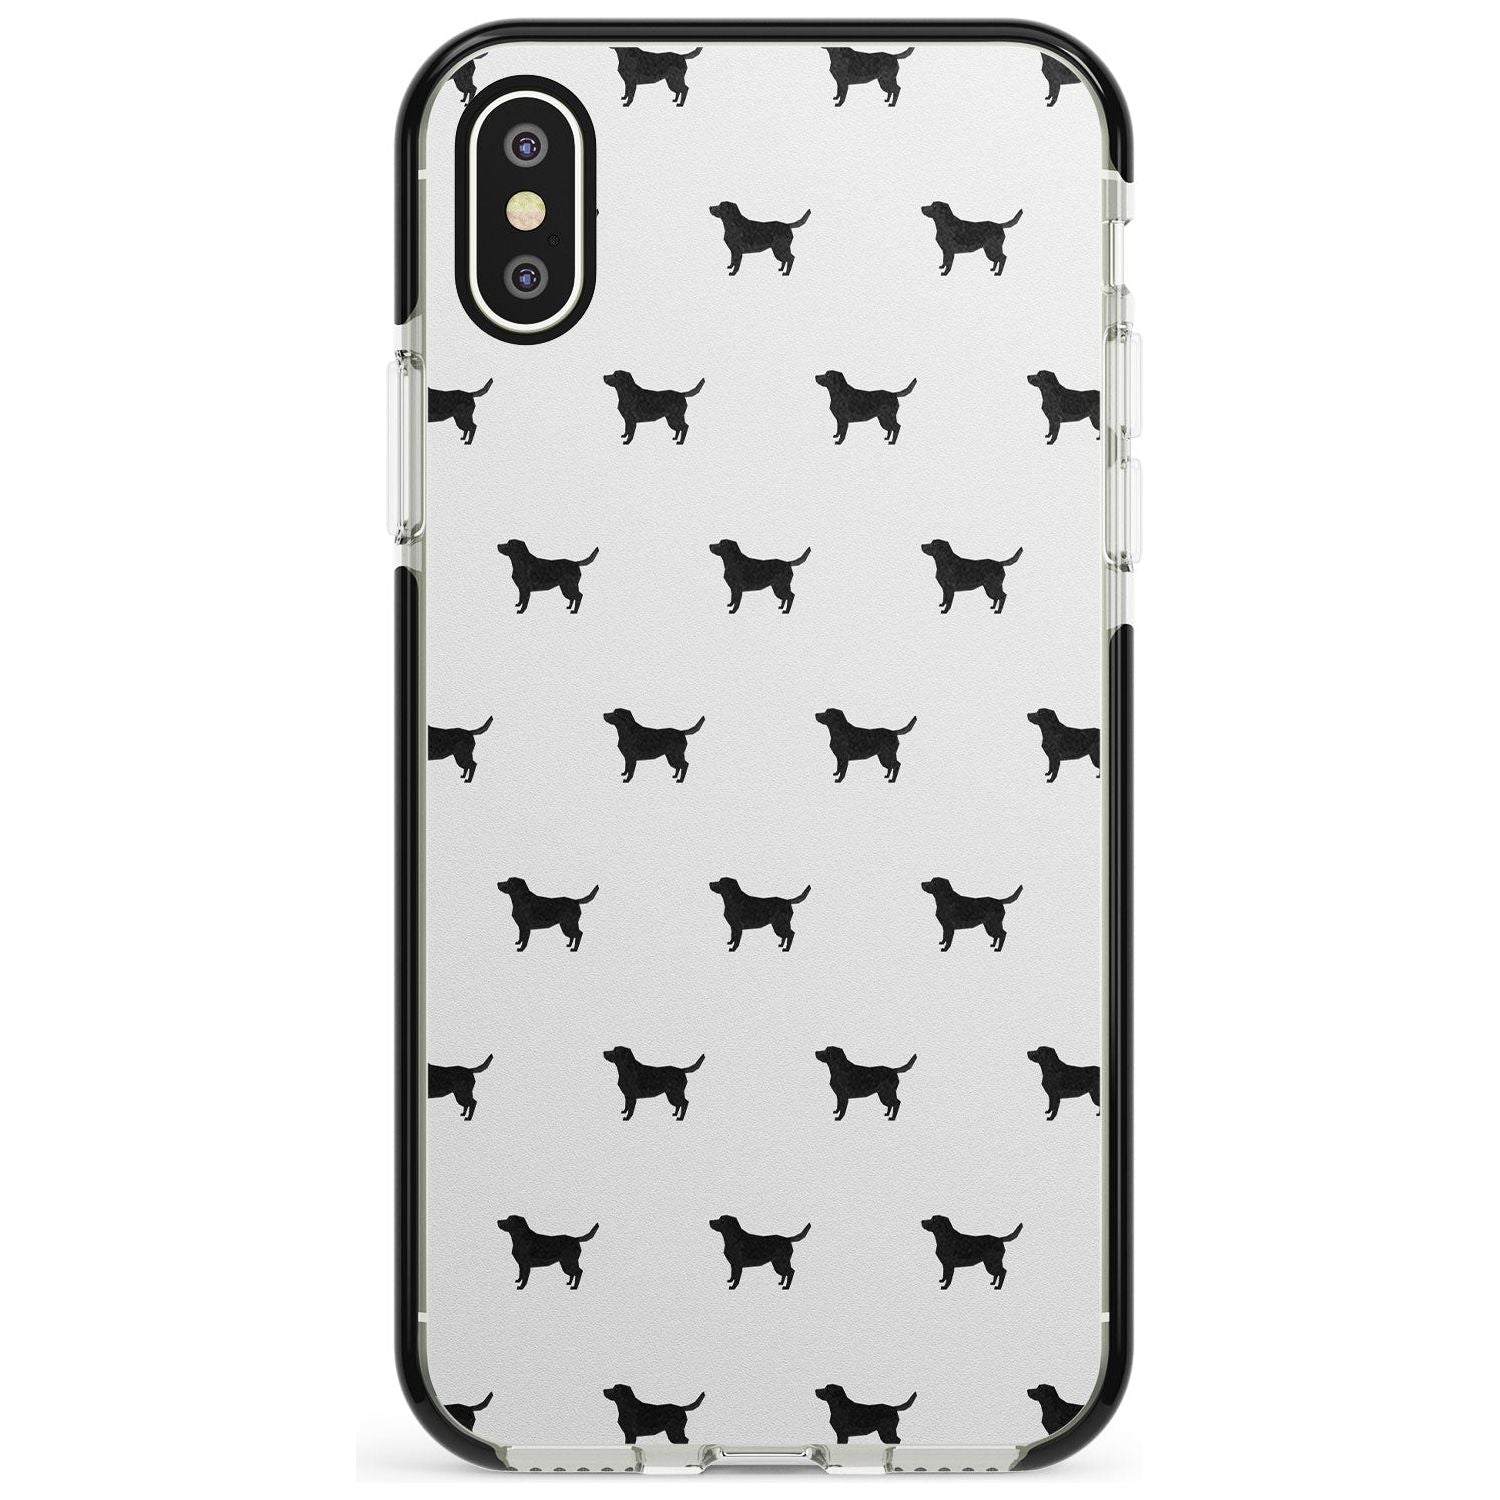 Black Labrador Dog Pattern Black Impact Phone Case for iPhone X XS Max XR